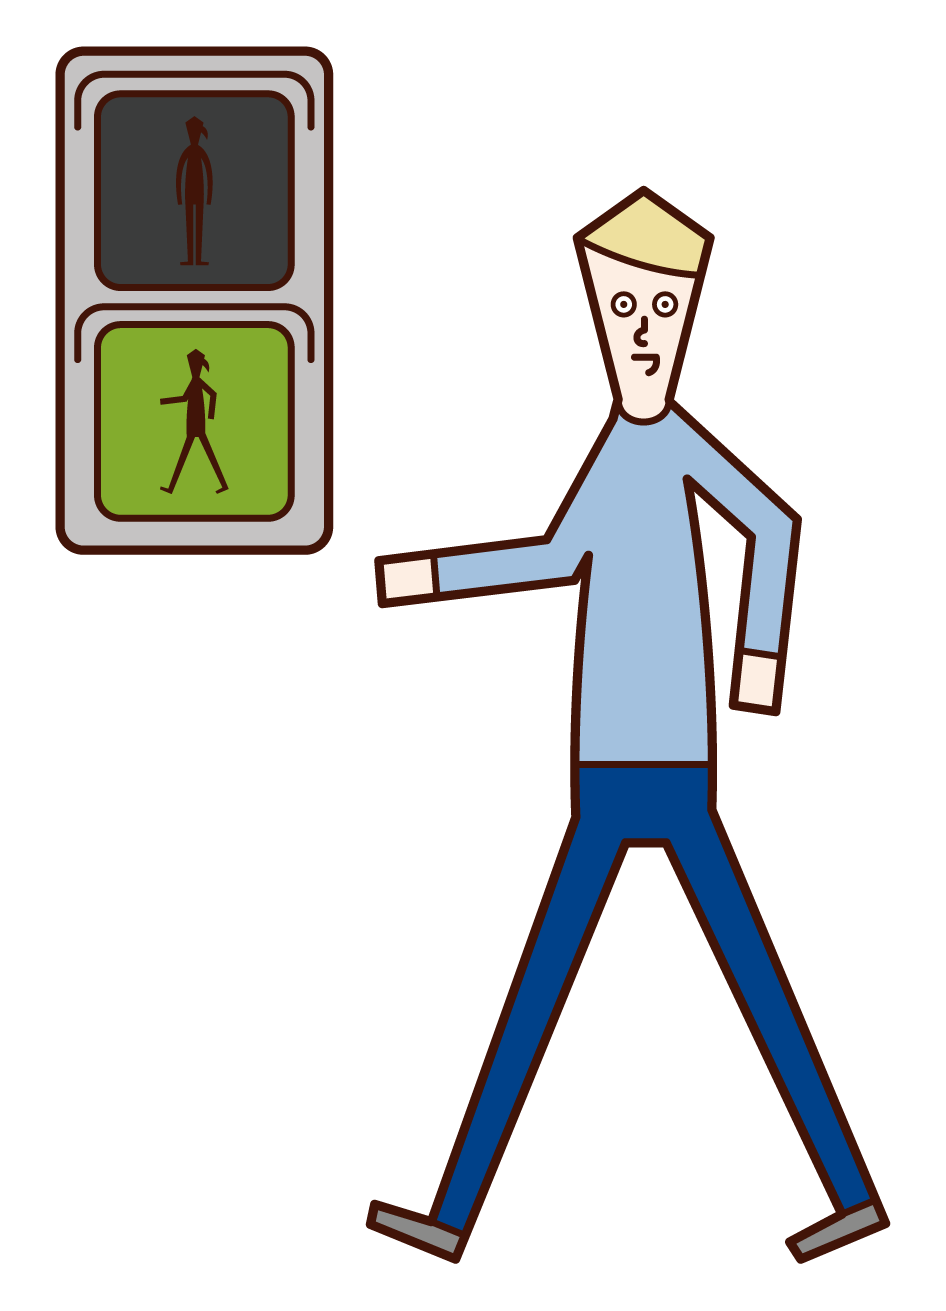 Illustration of a man advancing at a green light